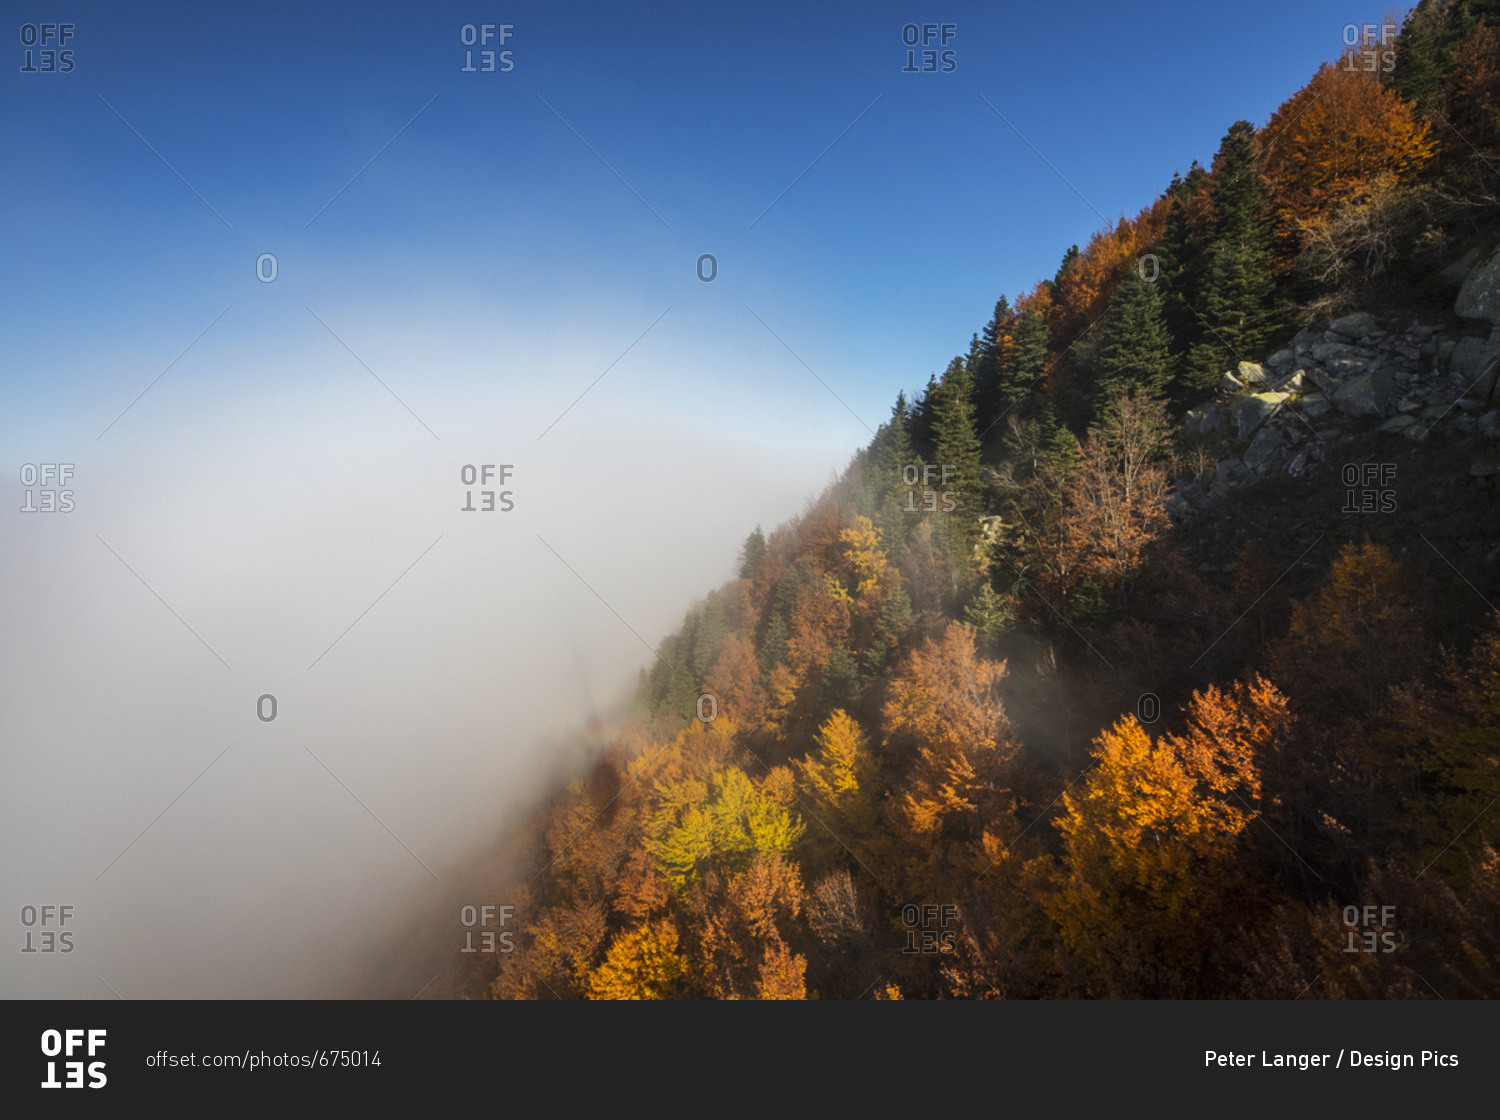 Bursa, Turkey - November 7, 2015: View From The Bursa Uludag Gondola Of Fog Along The Hillside With A Forest In Autumn Colors; Bursa, Turkey